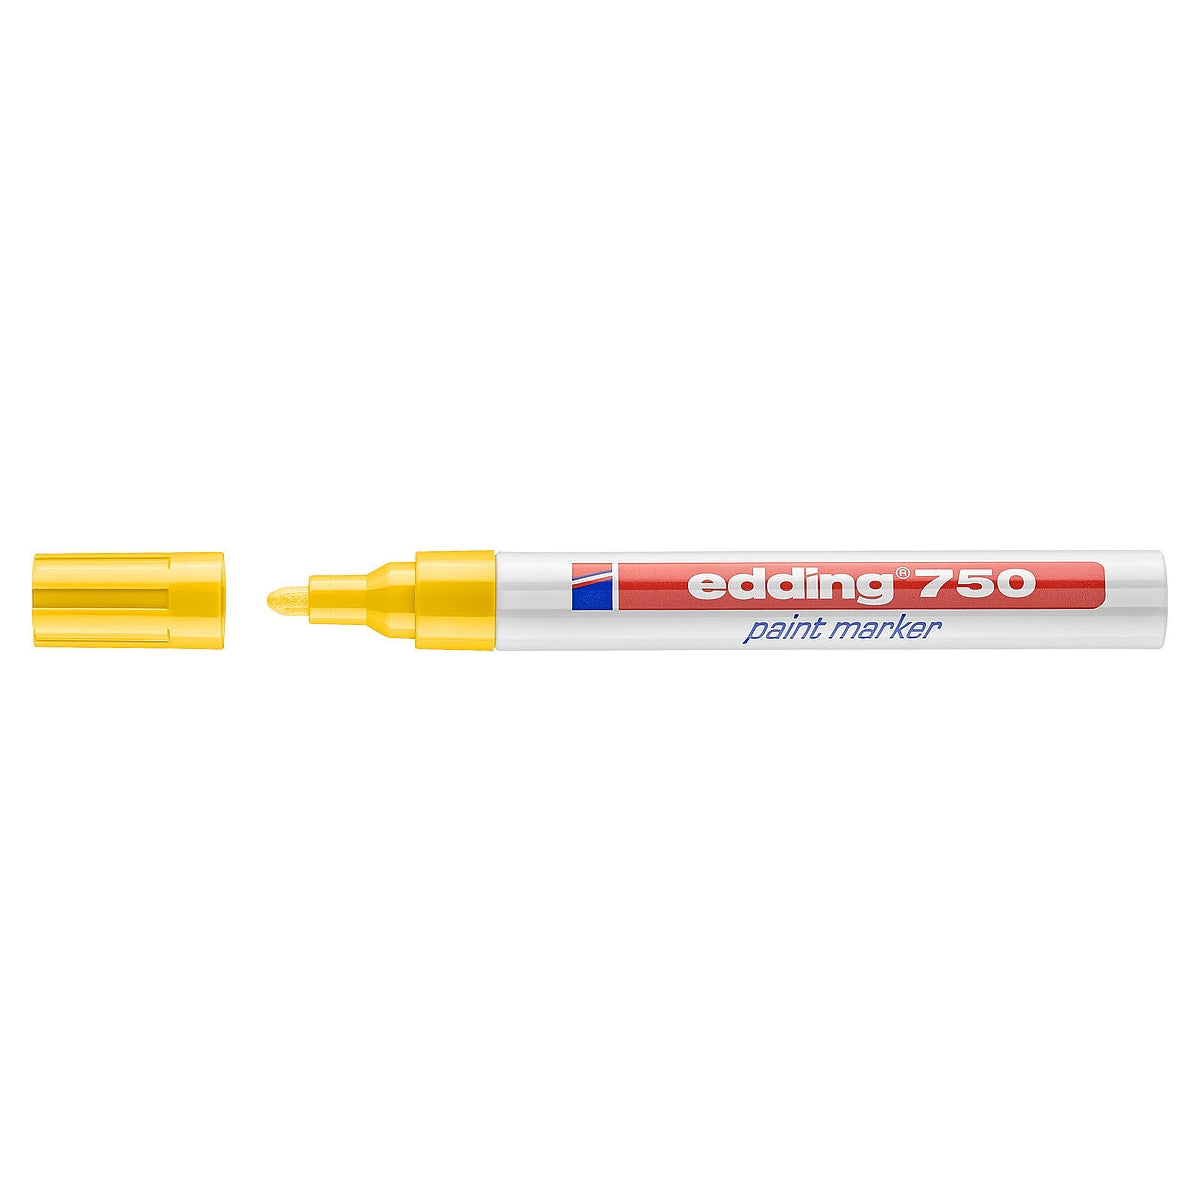 edding 750 Paint Marker, 2-4mm Bullet Tip, Yellow